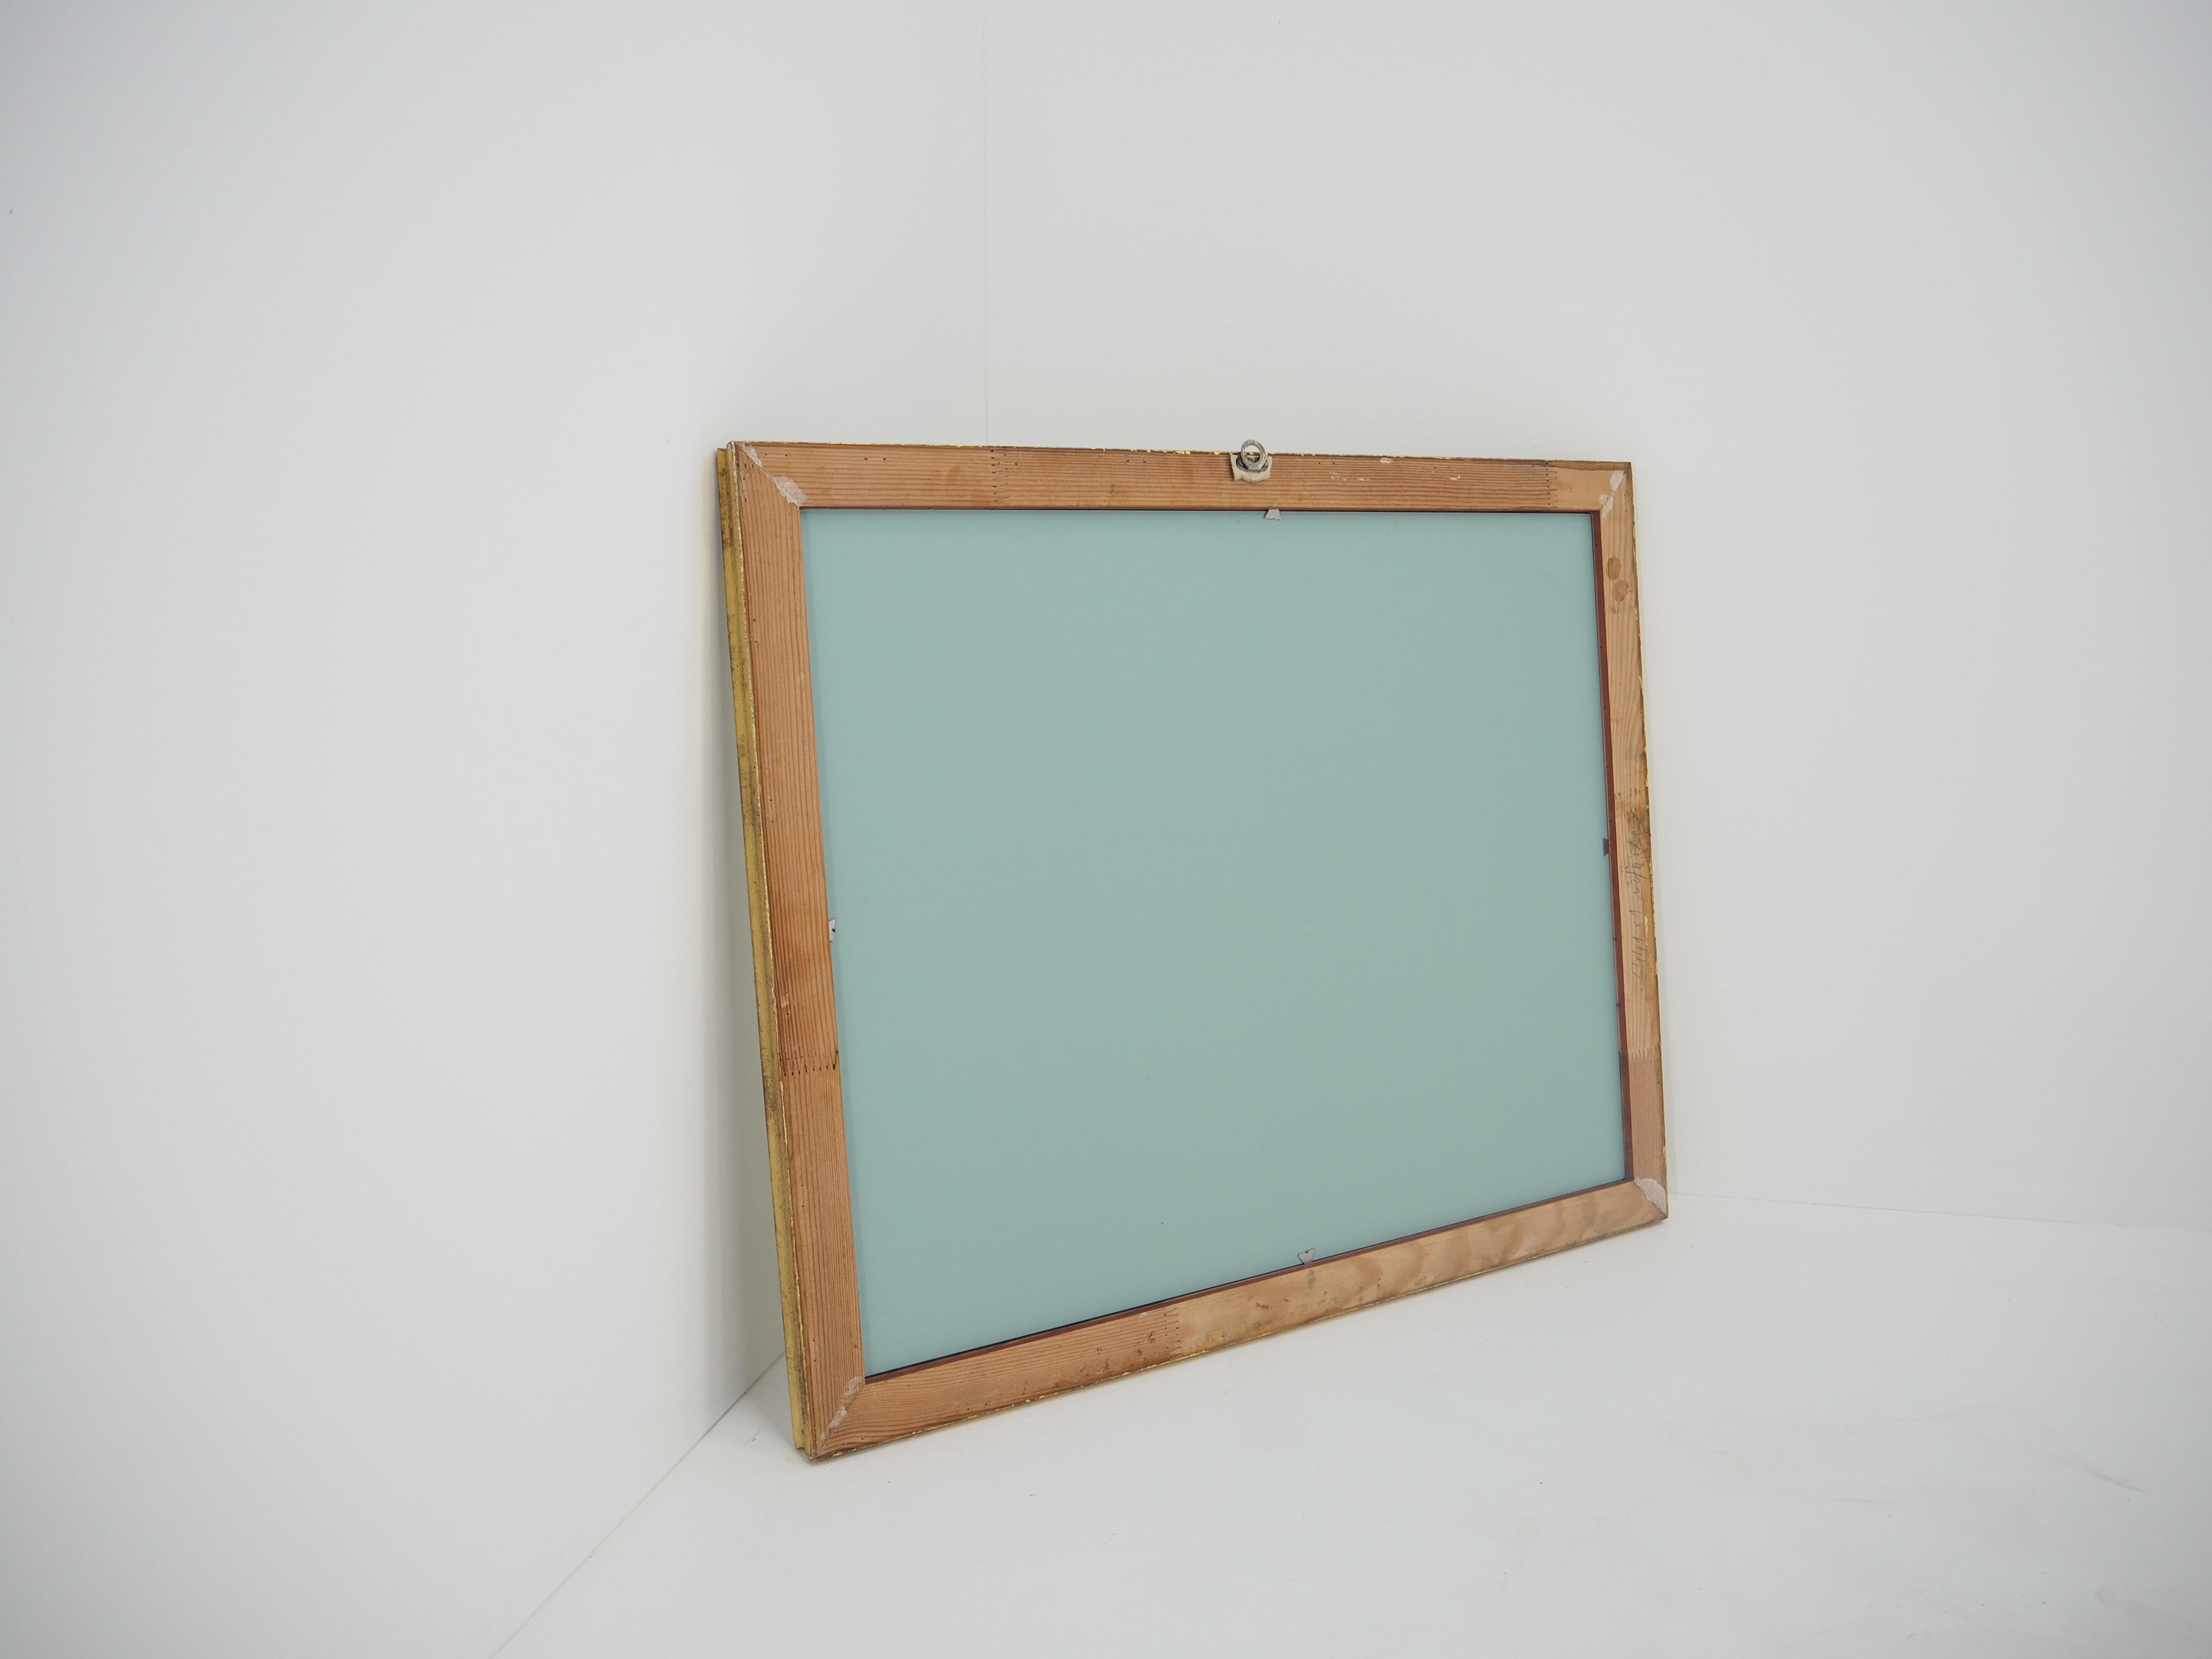 Antique Mirror with Wood Frame (Frühes 20. Jahrhundert)